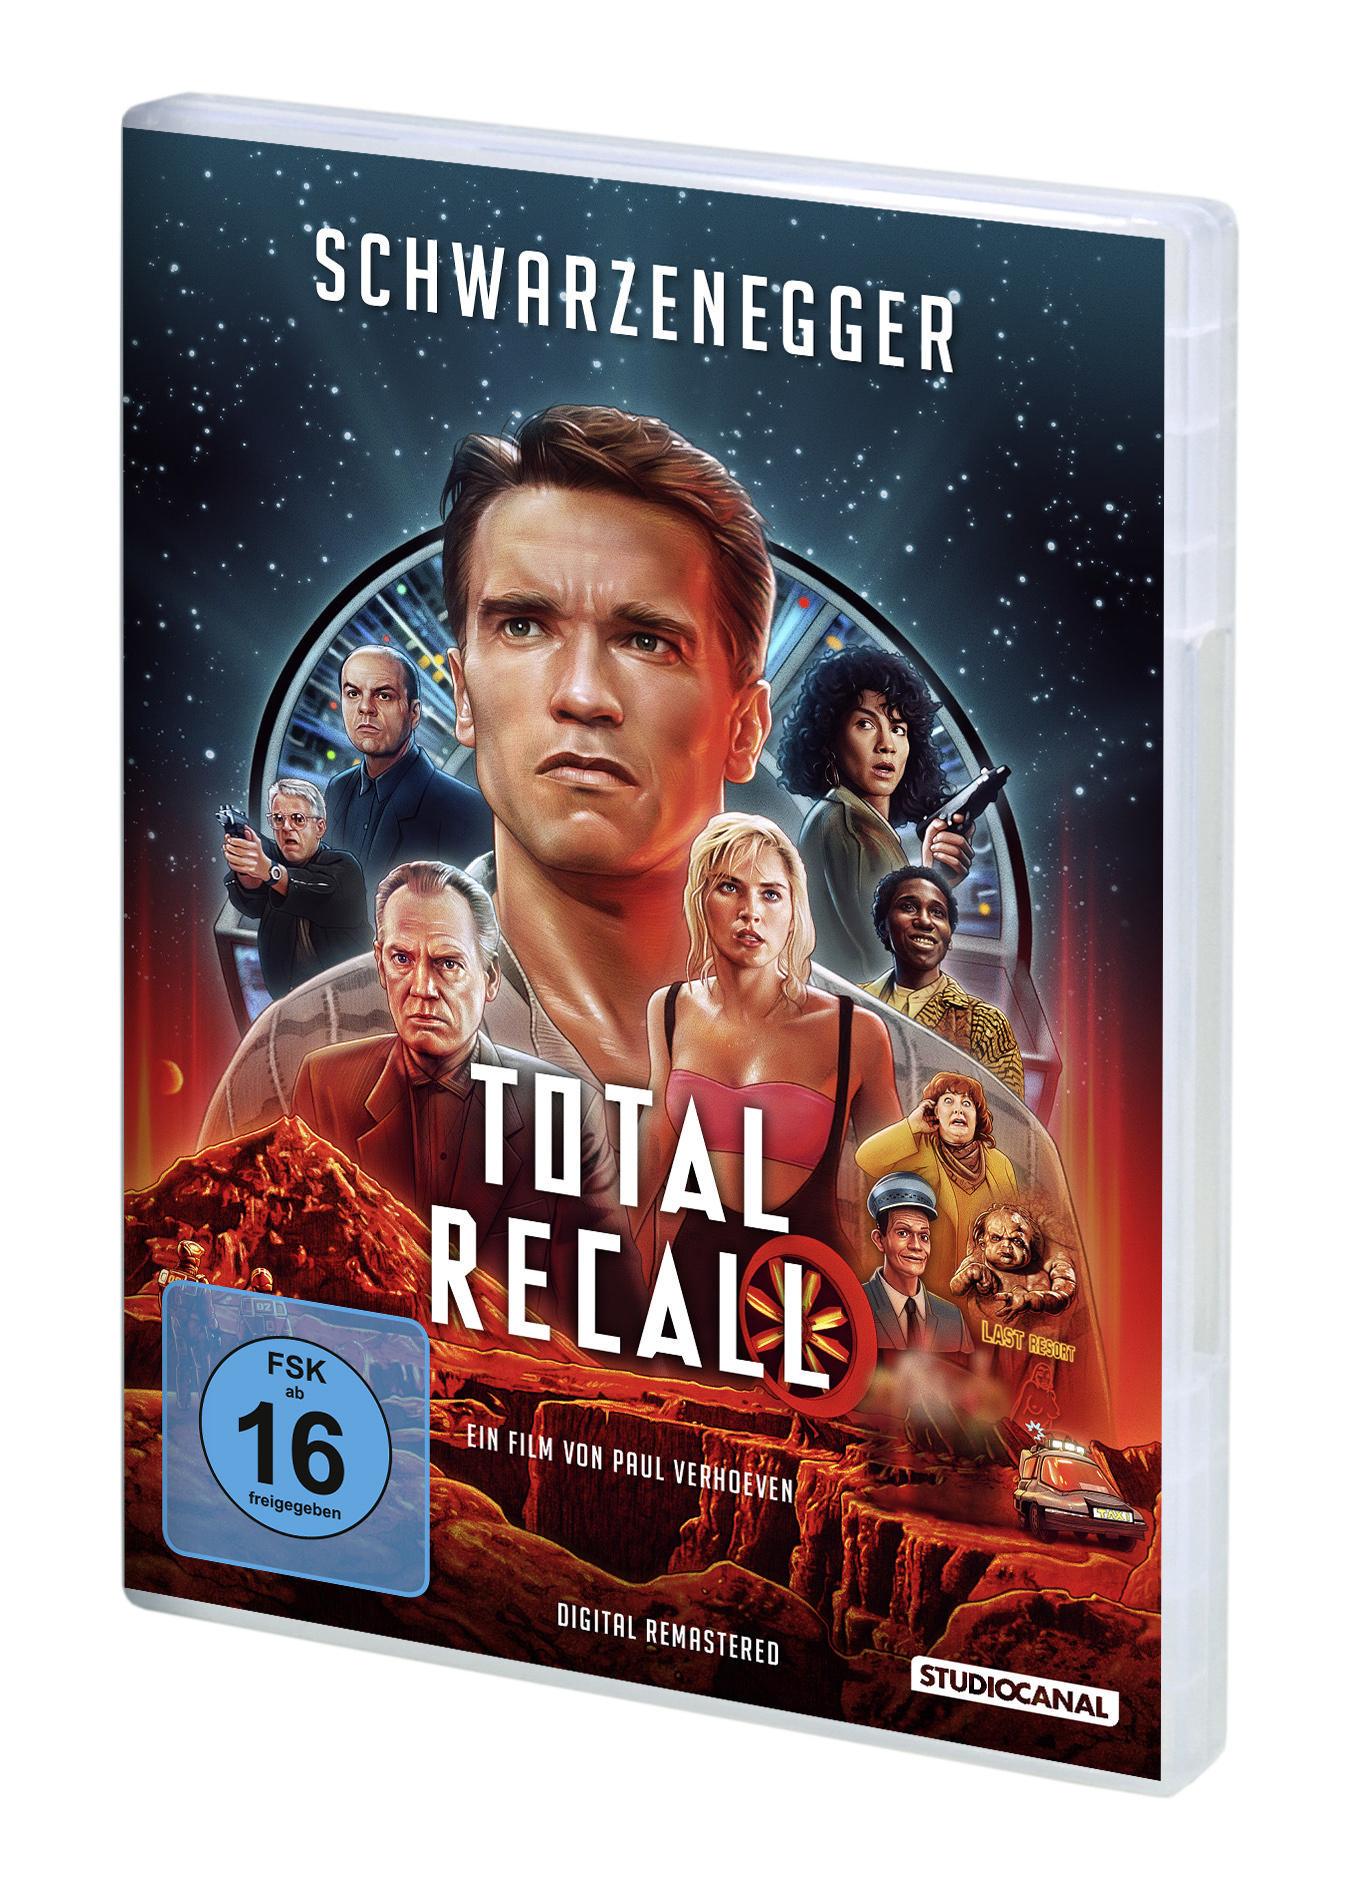 Total Recall - Die totale Erinnerung DVD